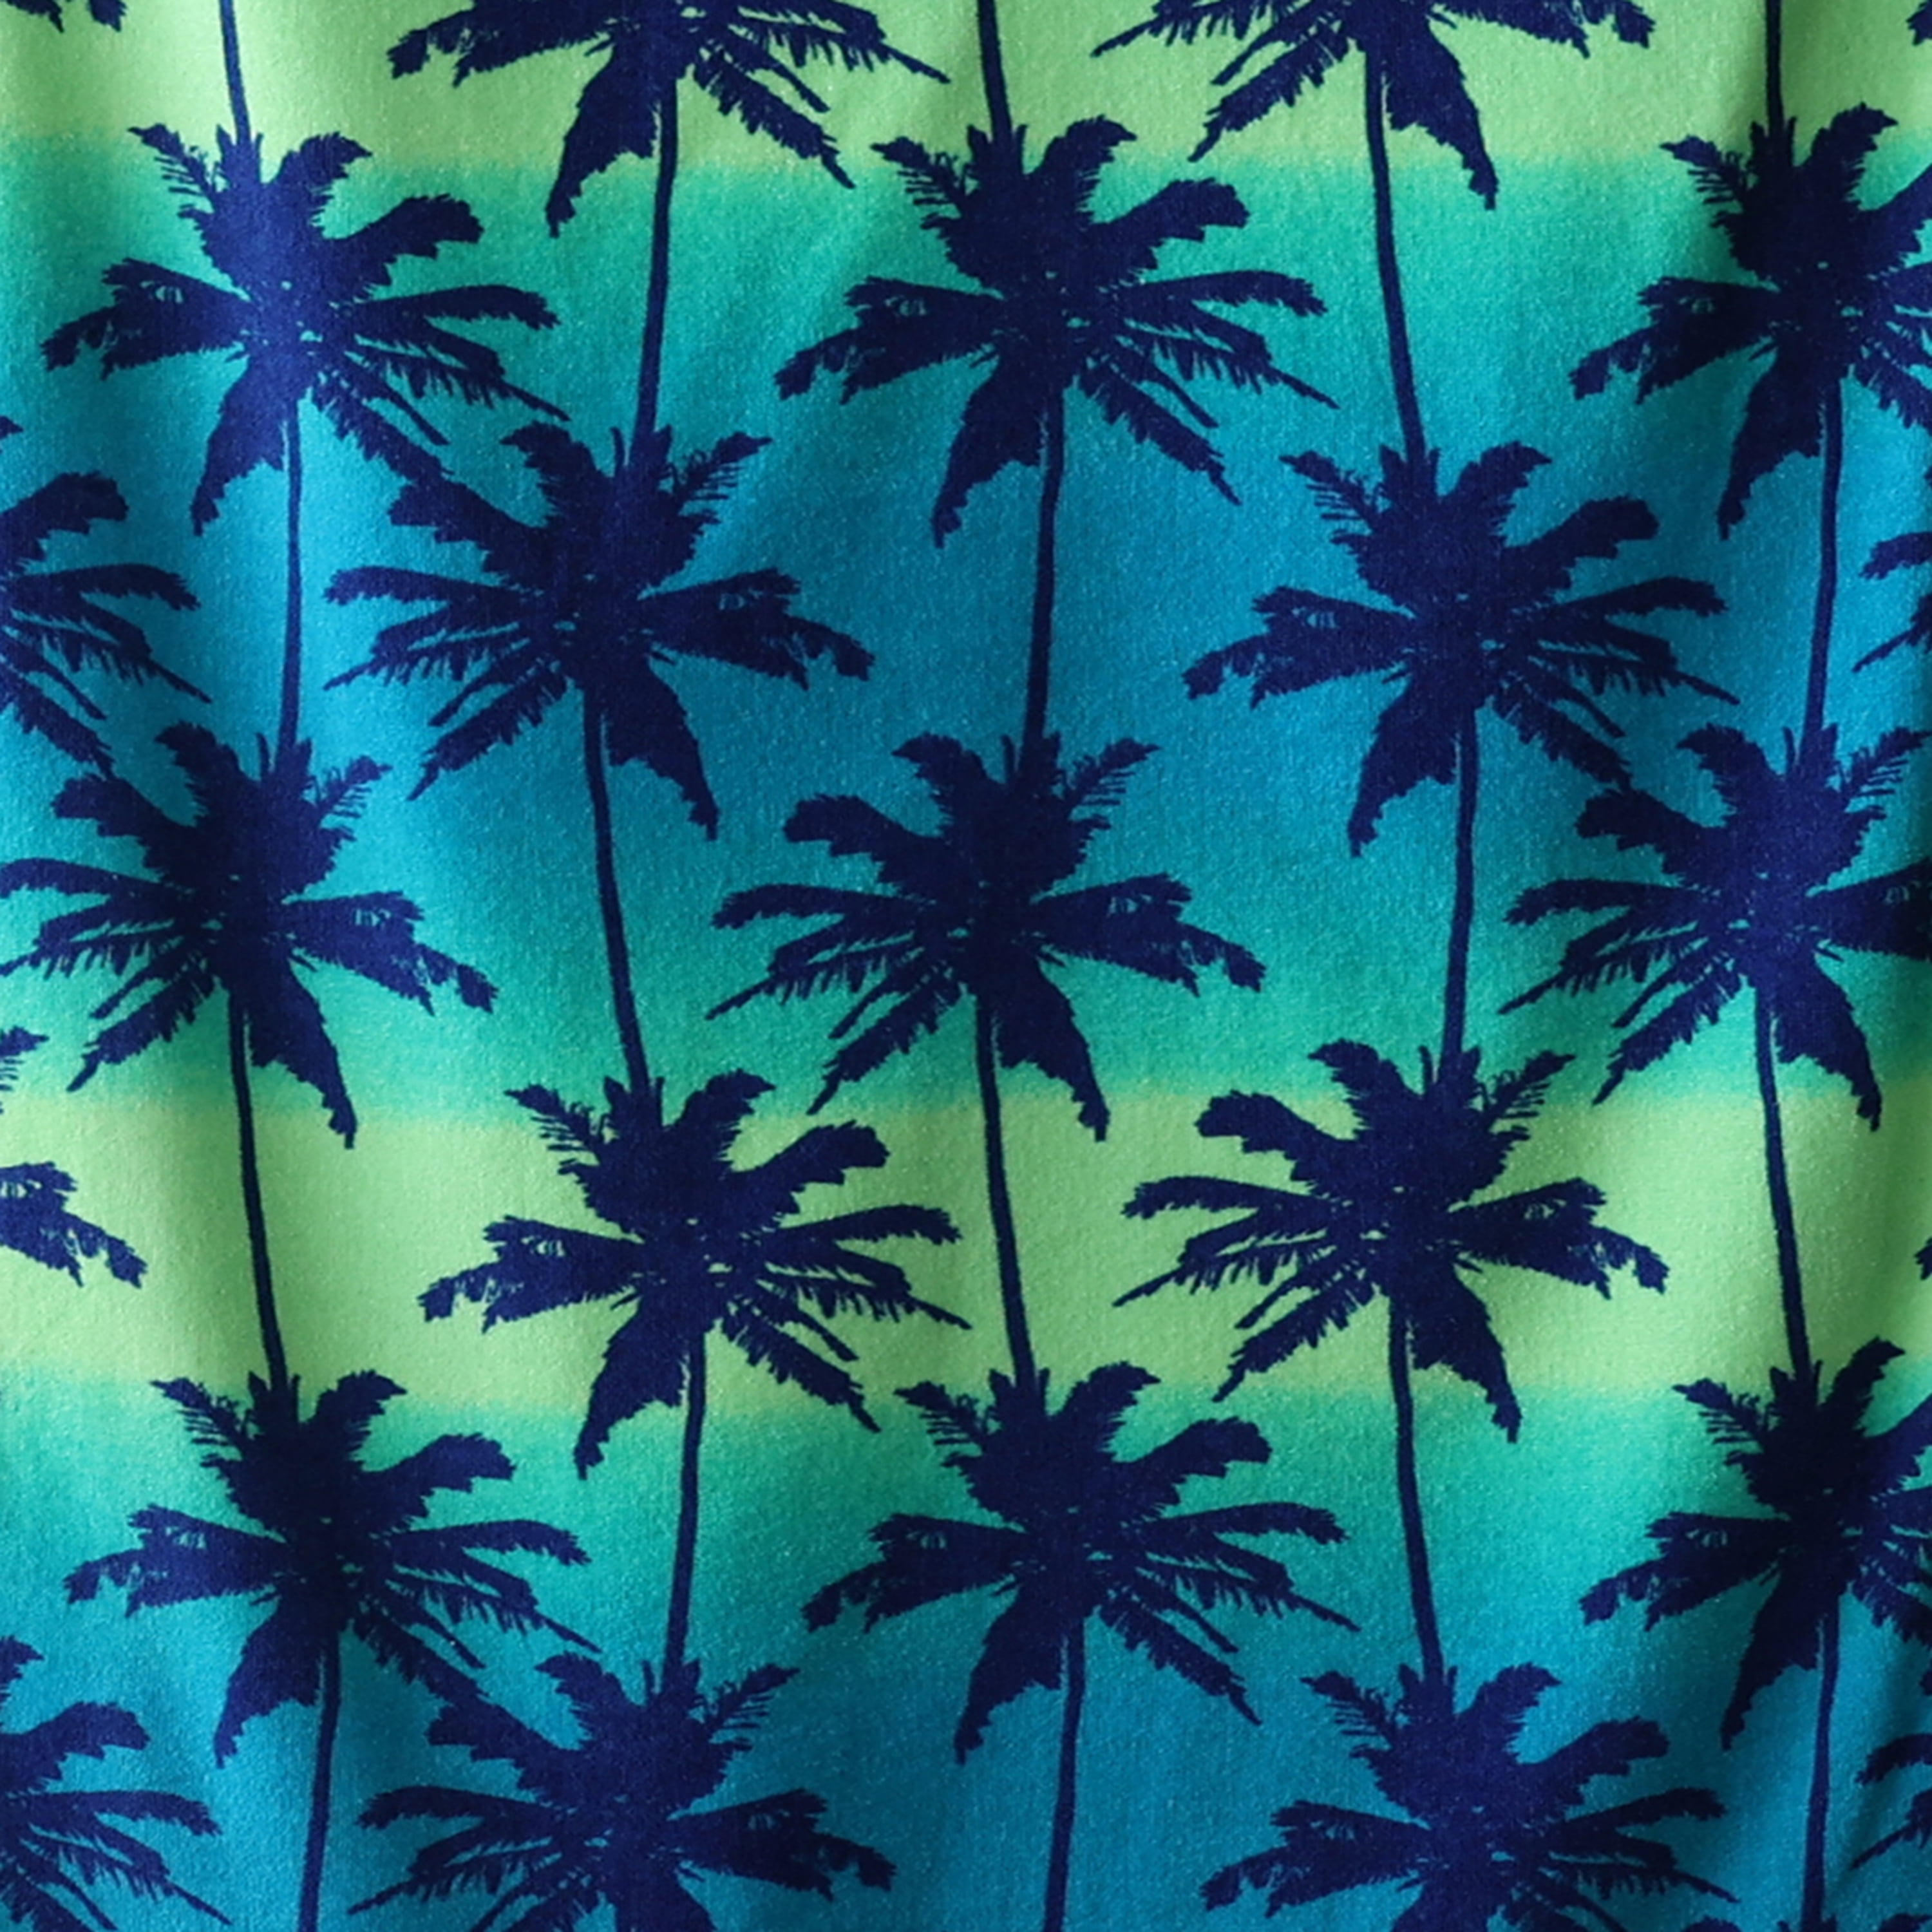 Mainstays Shark Bite Pattern Beach Towel, Multi-Color, 60”L x 28”W